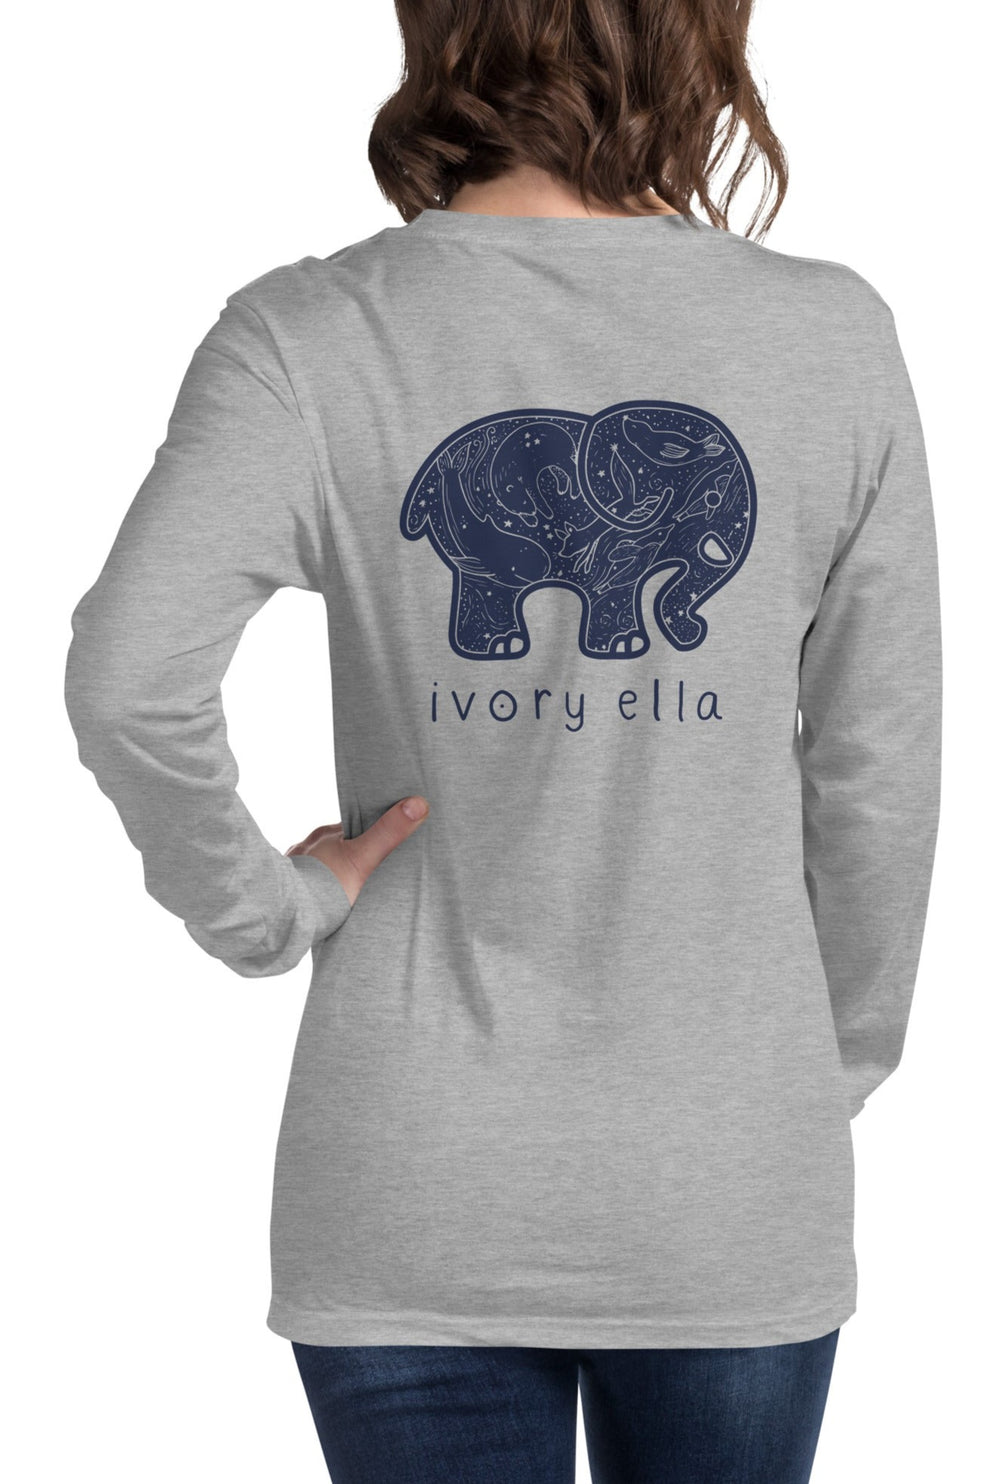 Night Sky Unisex Long Sleeve T-Shirt – Ivory Ella